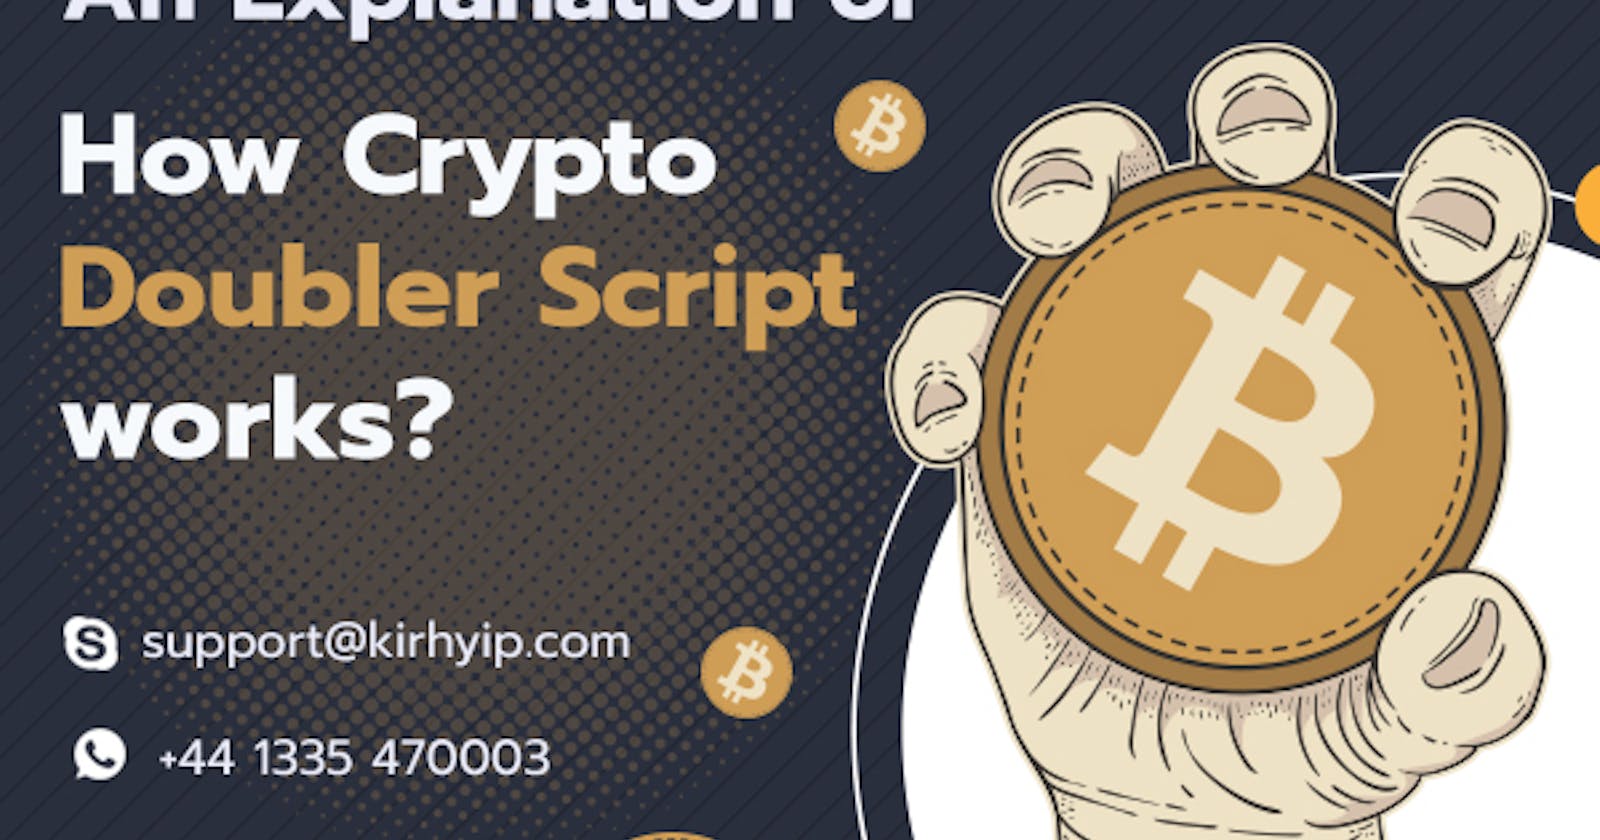 Crypto doubler script: BTC | Tron | ETH platforms